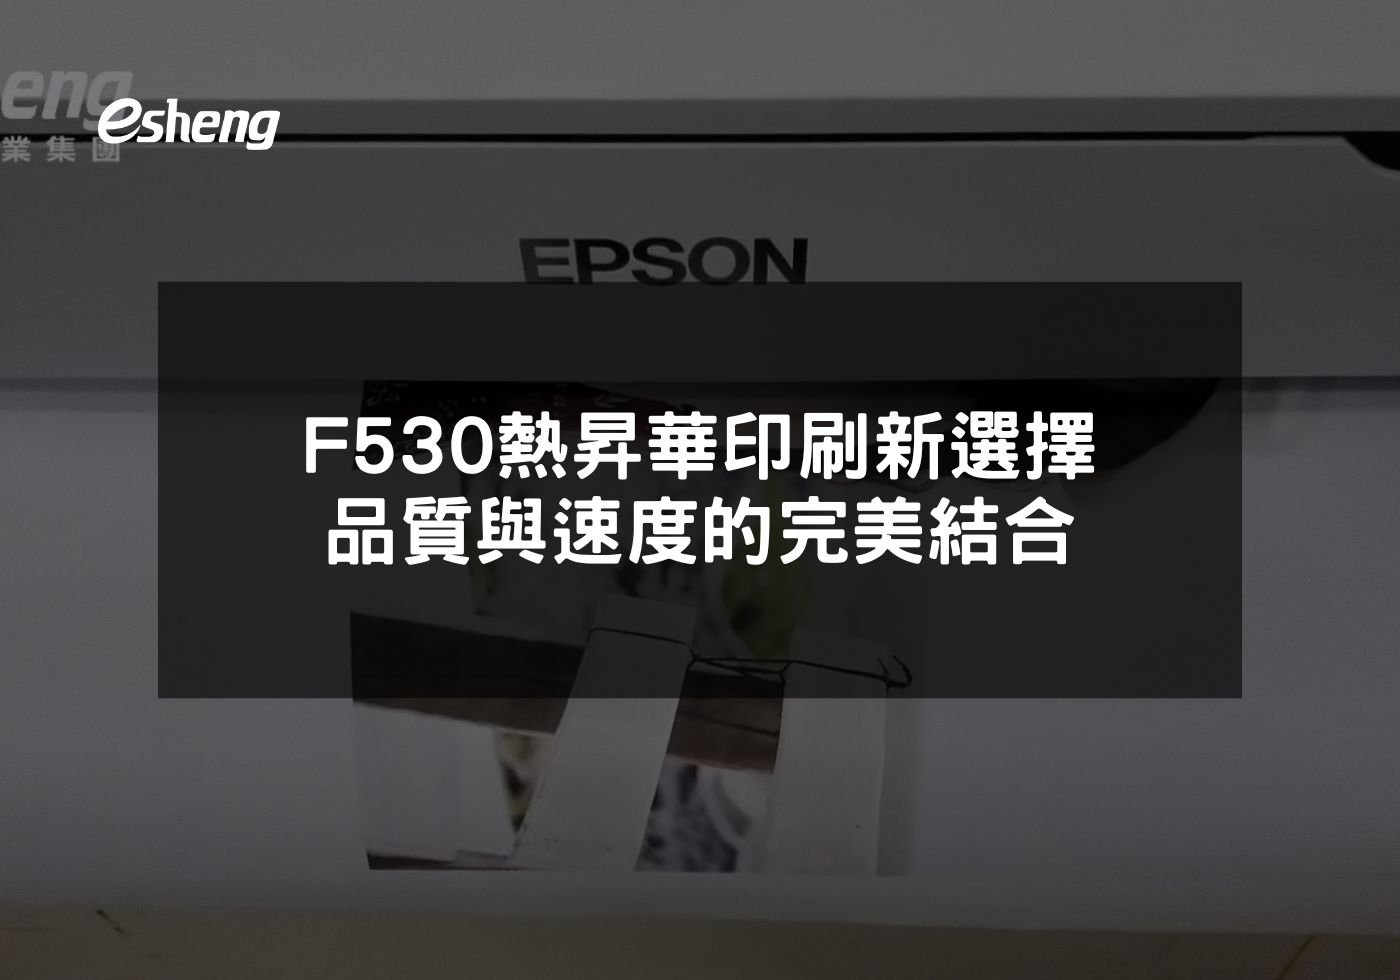 EPSON F530評價熱昇華印刷新選擇，品質與速度的完美結合